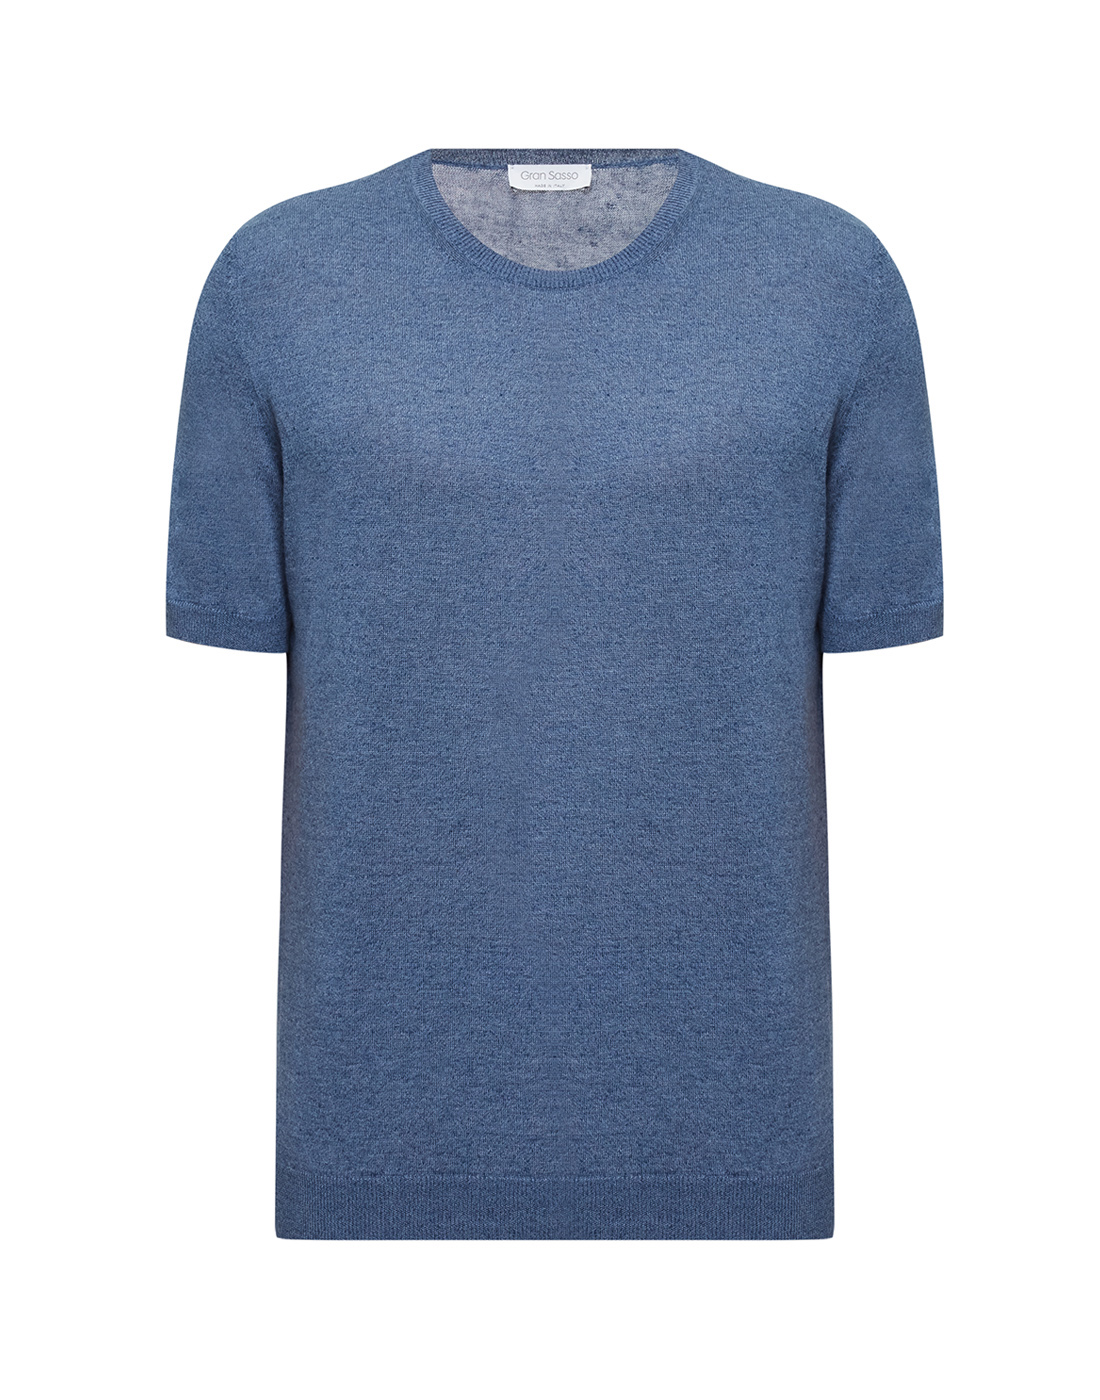 Мужская синяя льняная футболка Gran Sasso SG2021/57169/18601/582-1